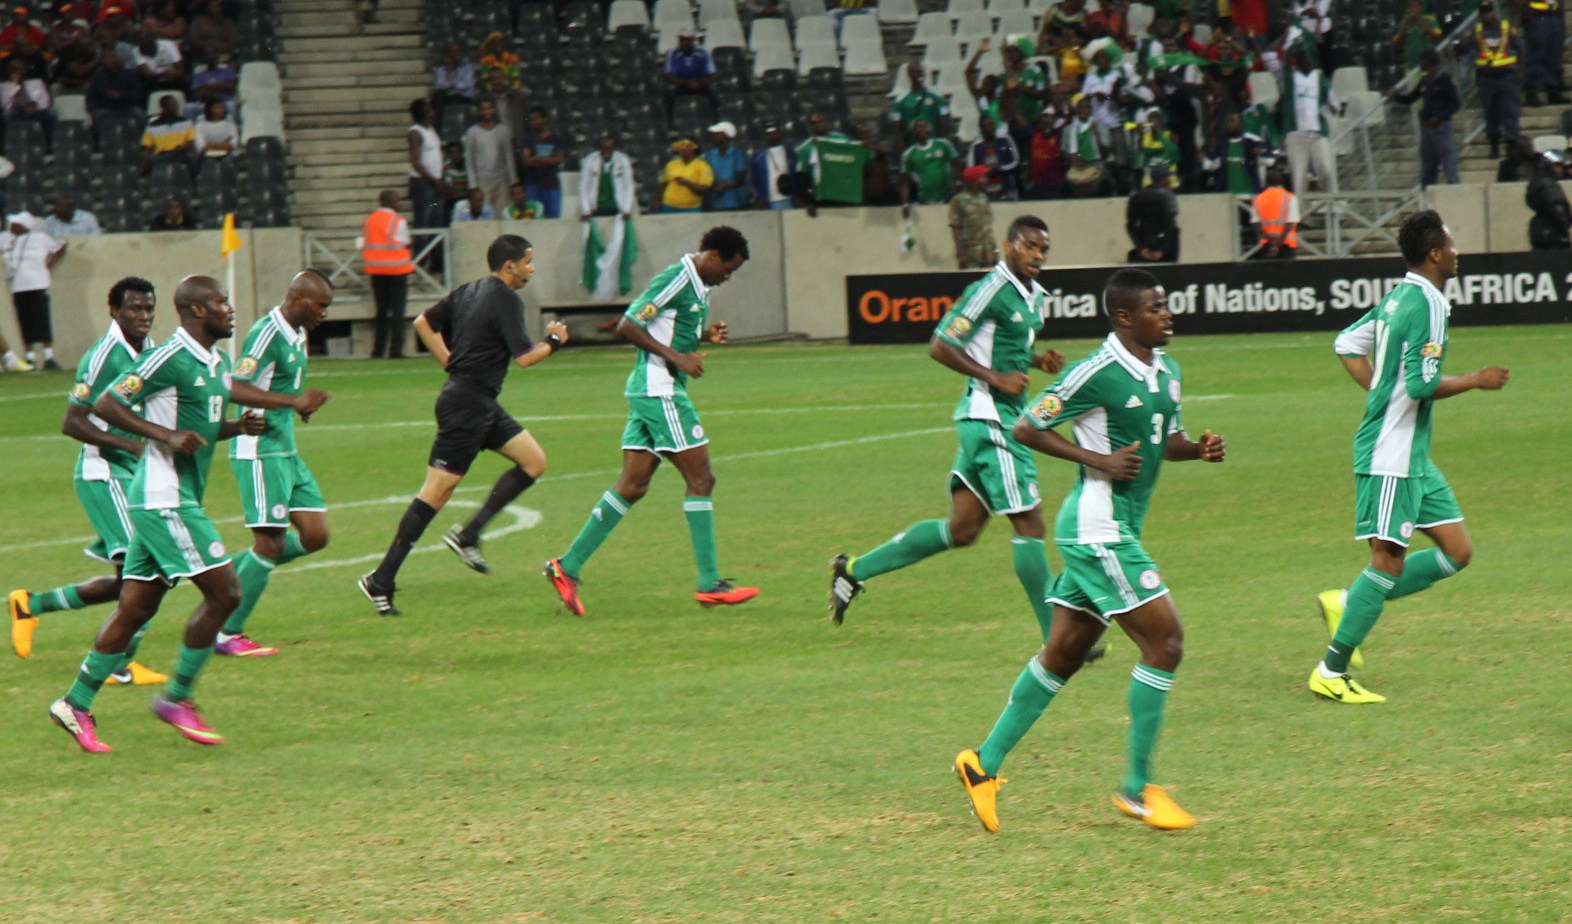 WAFU Cup: Ezenwa Shines As Nigeria Holds Mali